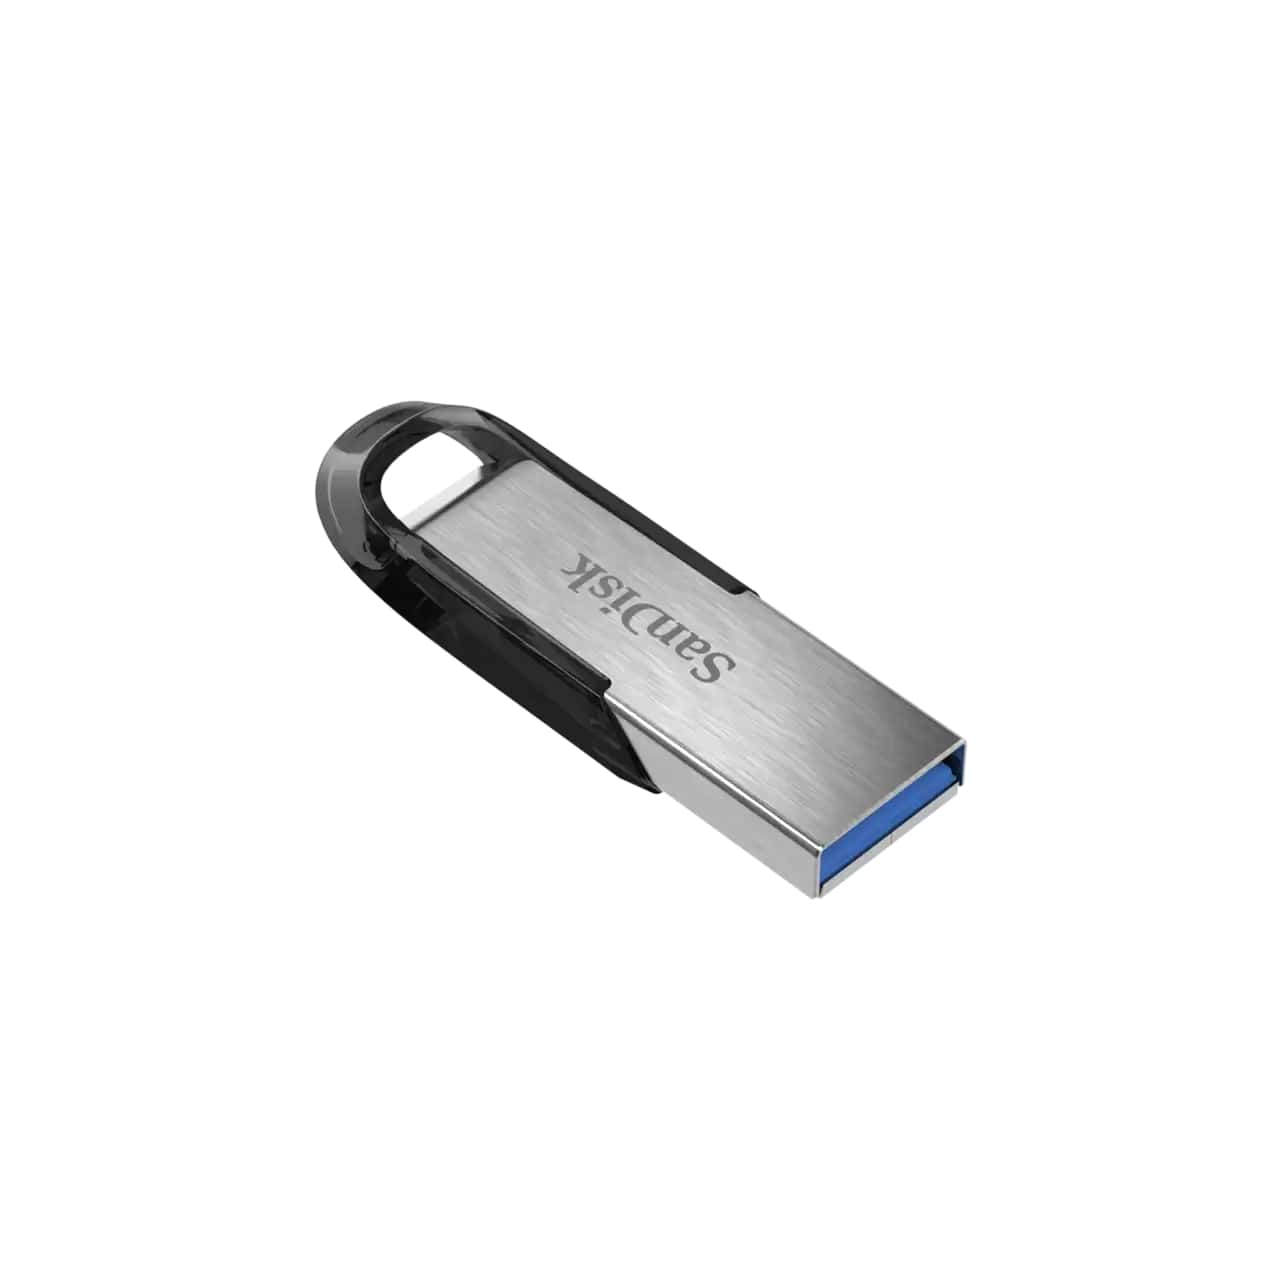 SanDisk Ultra Flair 3.0 USB